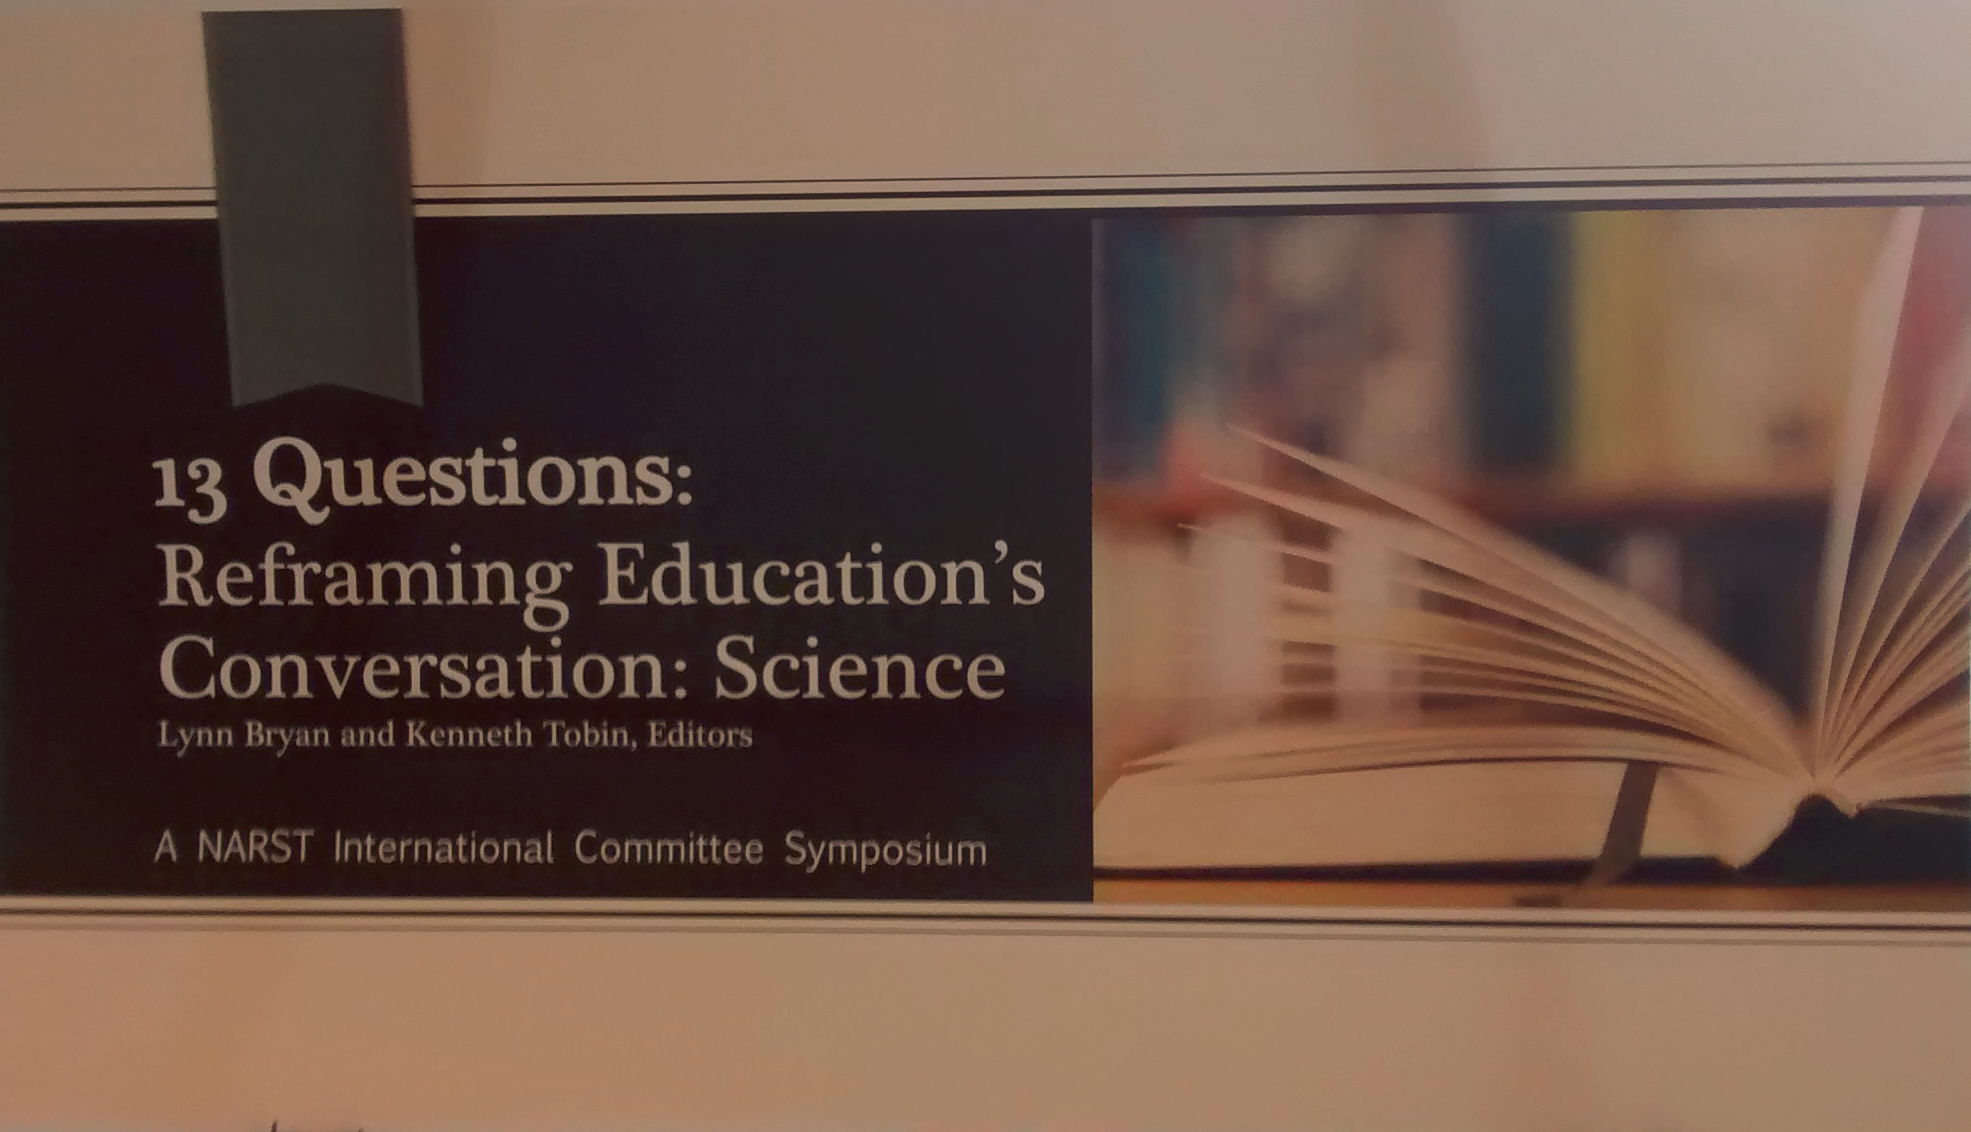 Bryan, L. & Tobin, K. (upcoming). 13 Questions: Reframing Education’s Conversation: Science. New York: Peter-Lang.